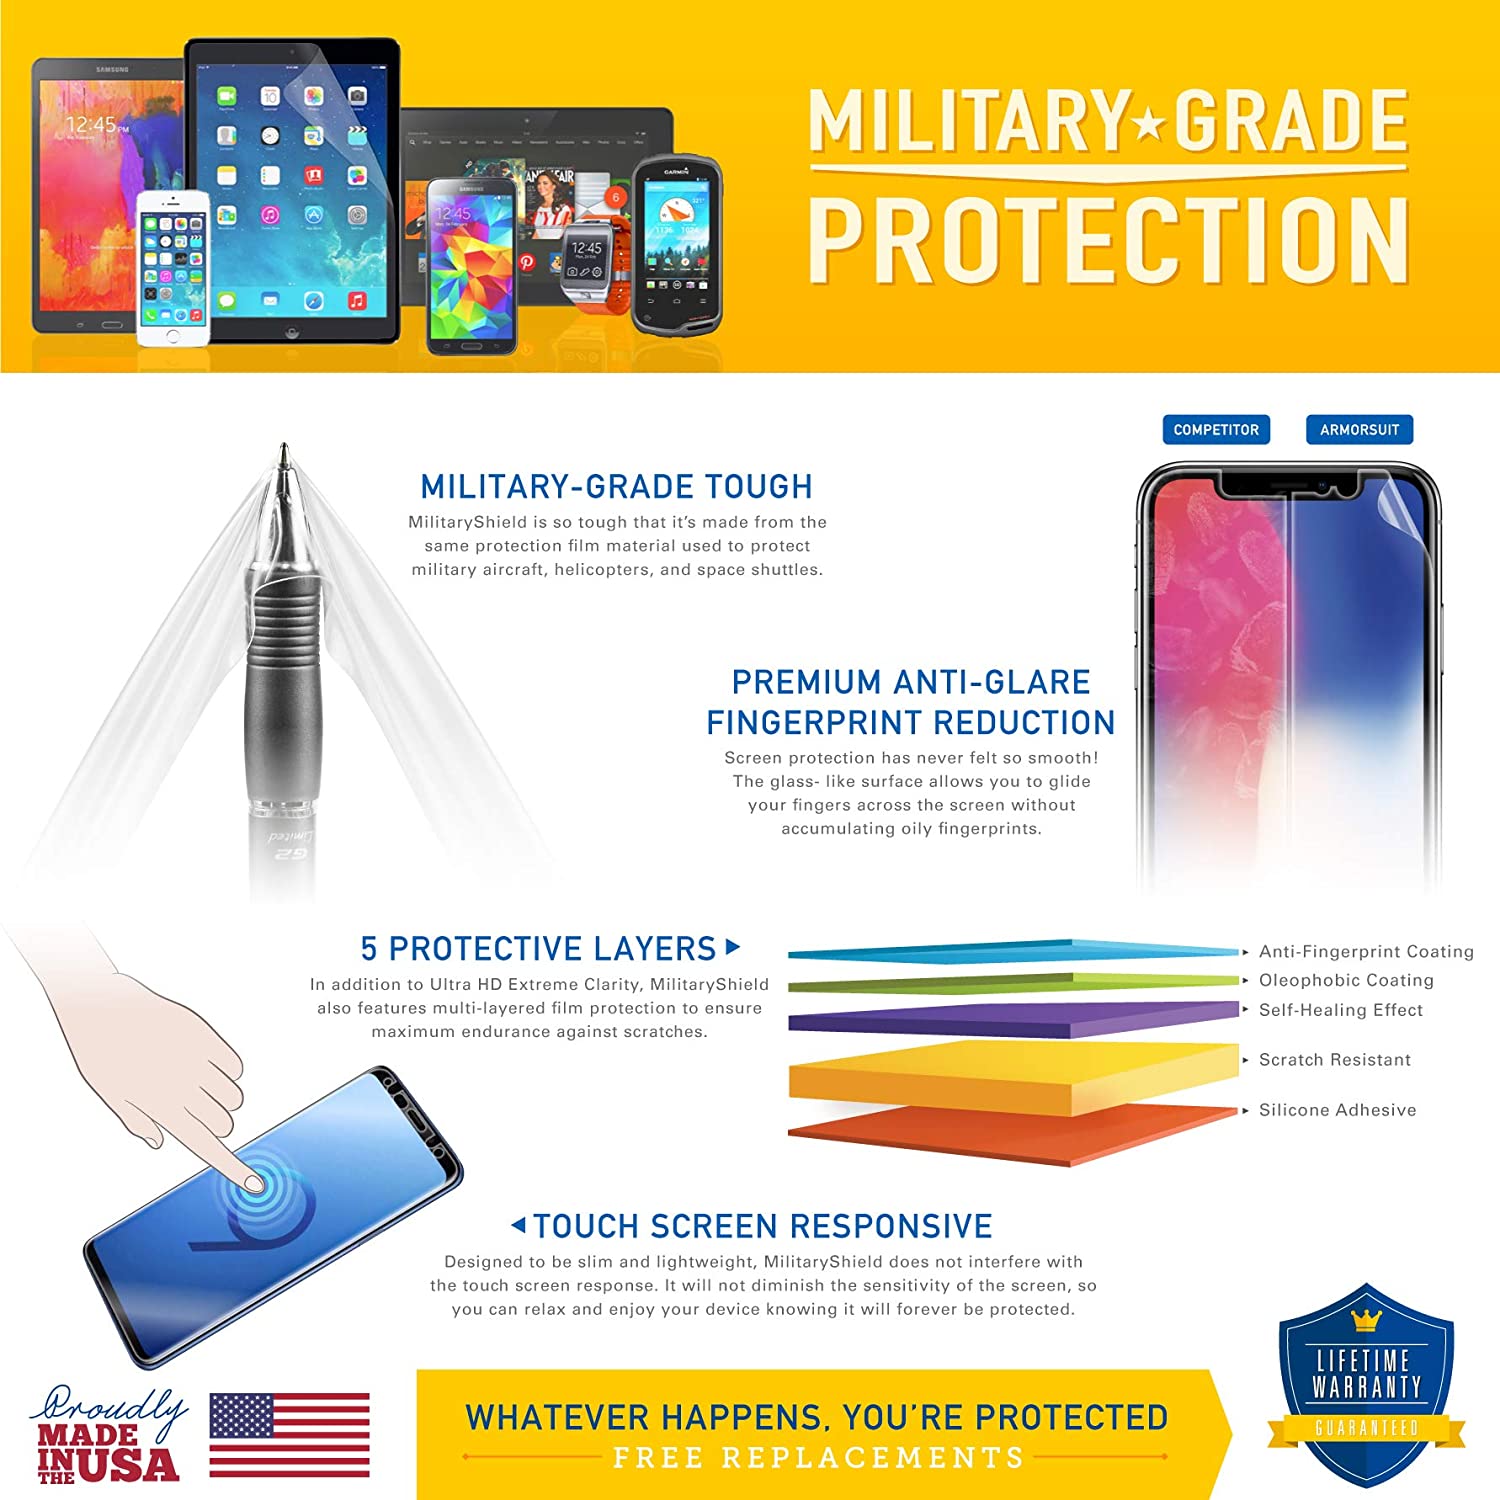 [2 Pack] LG Optimus F3 (LS720 / VM720) (Virgin Mobile / Sprint) Screen Protector